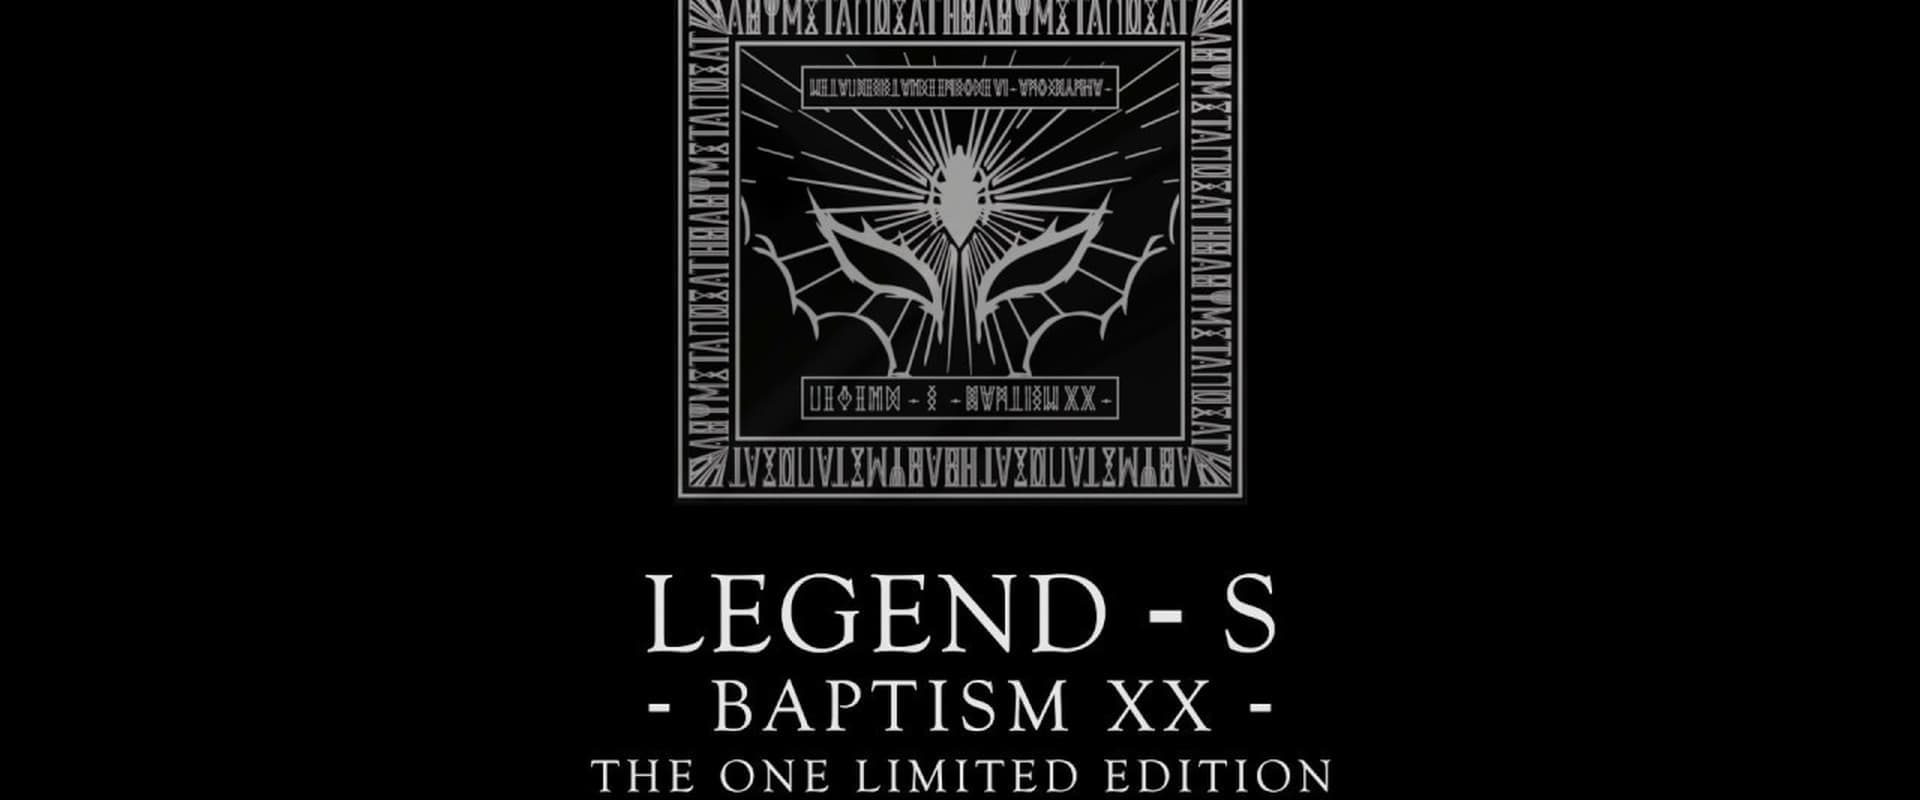 BABYMETAL - Legend - S - Baptism XX